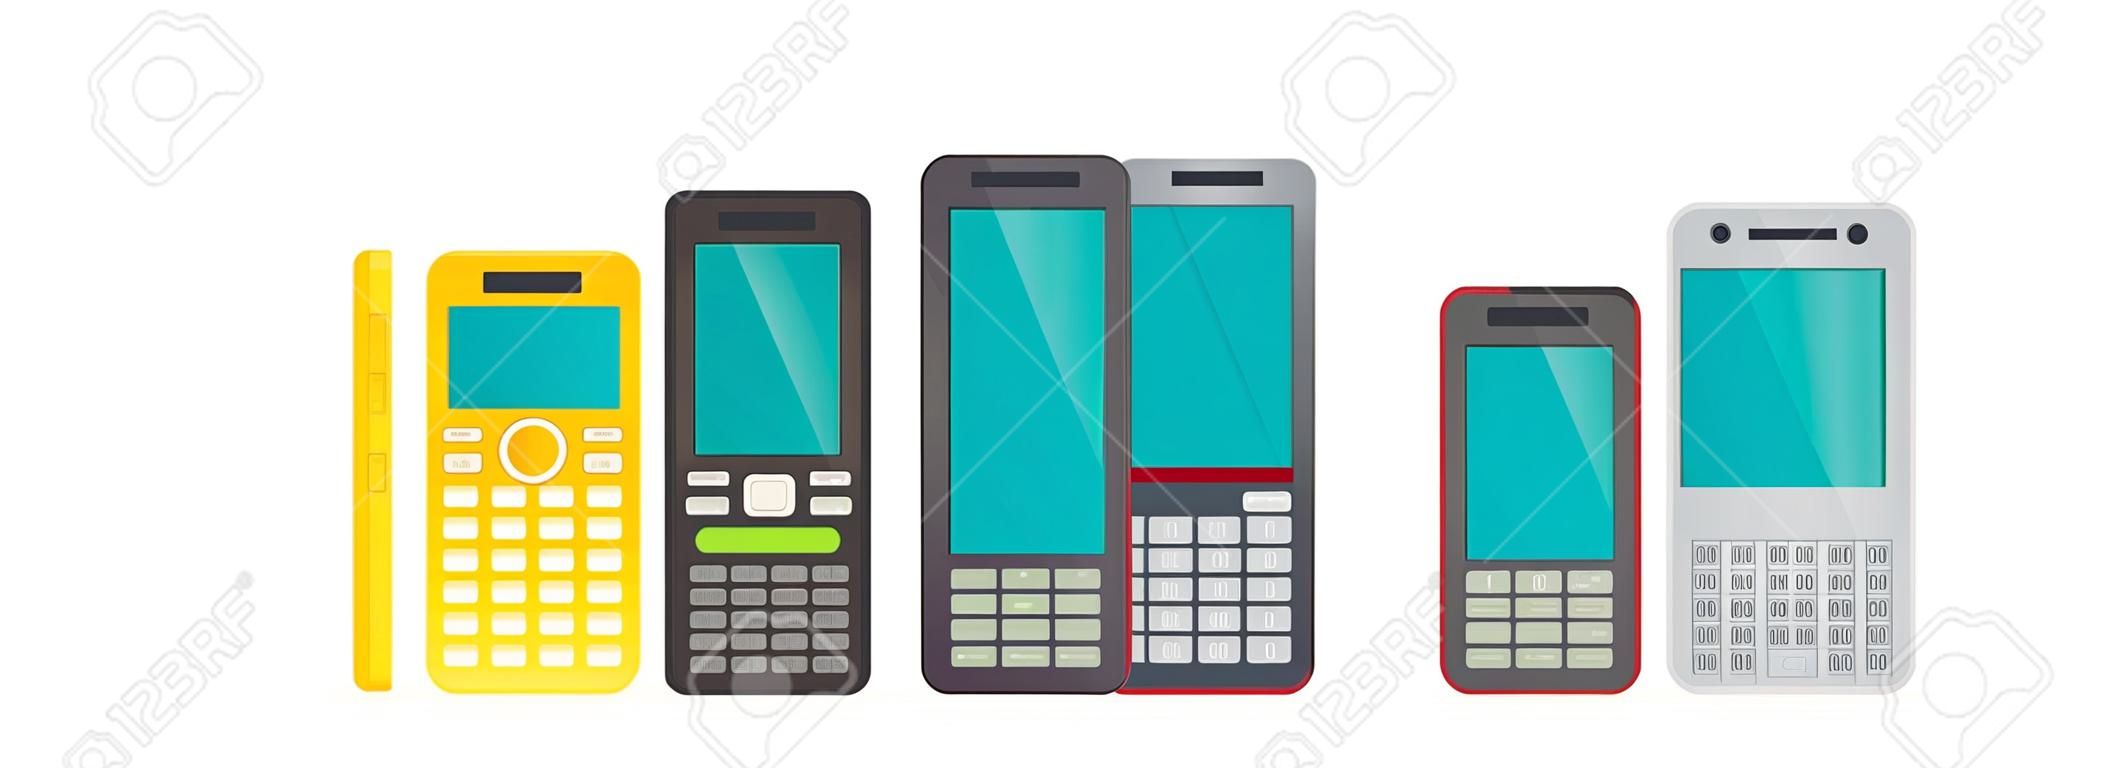 Cell phone evolution illustration. Flat vector.